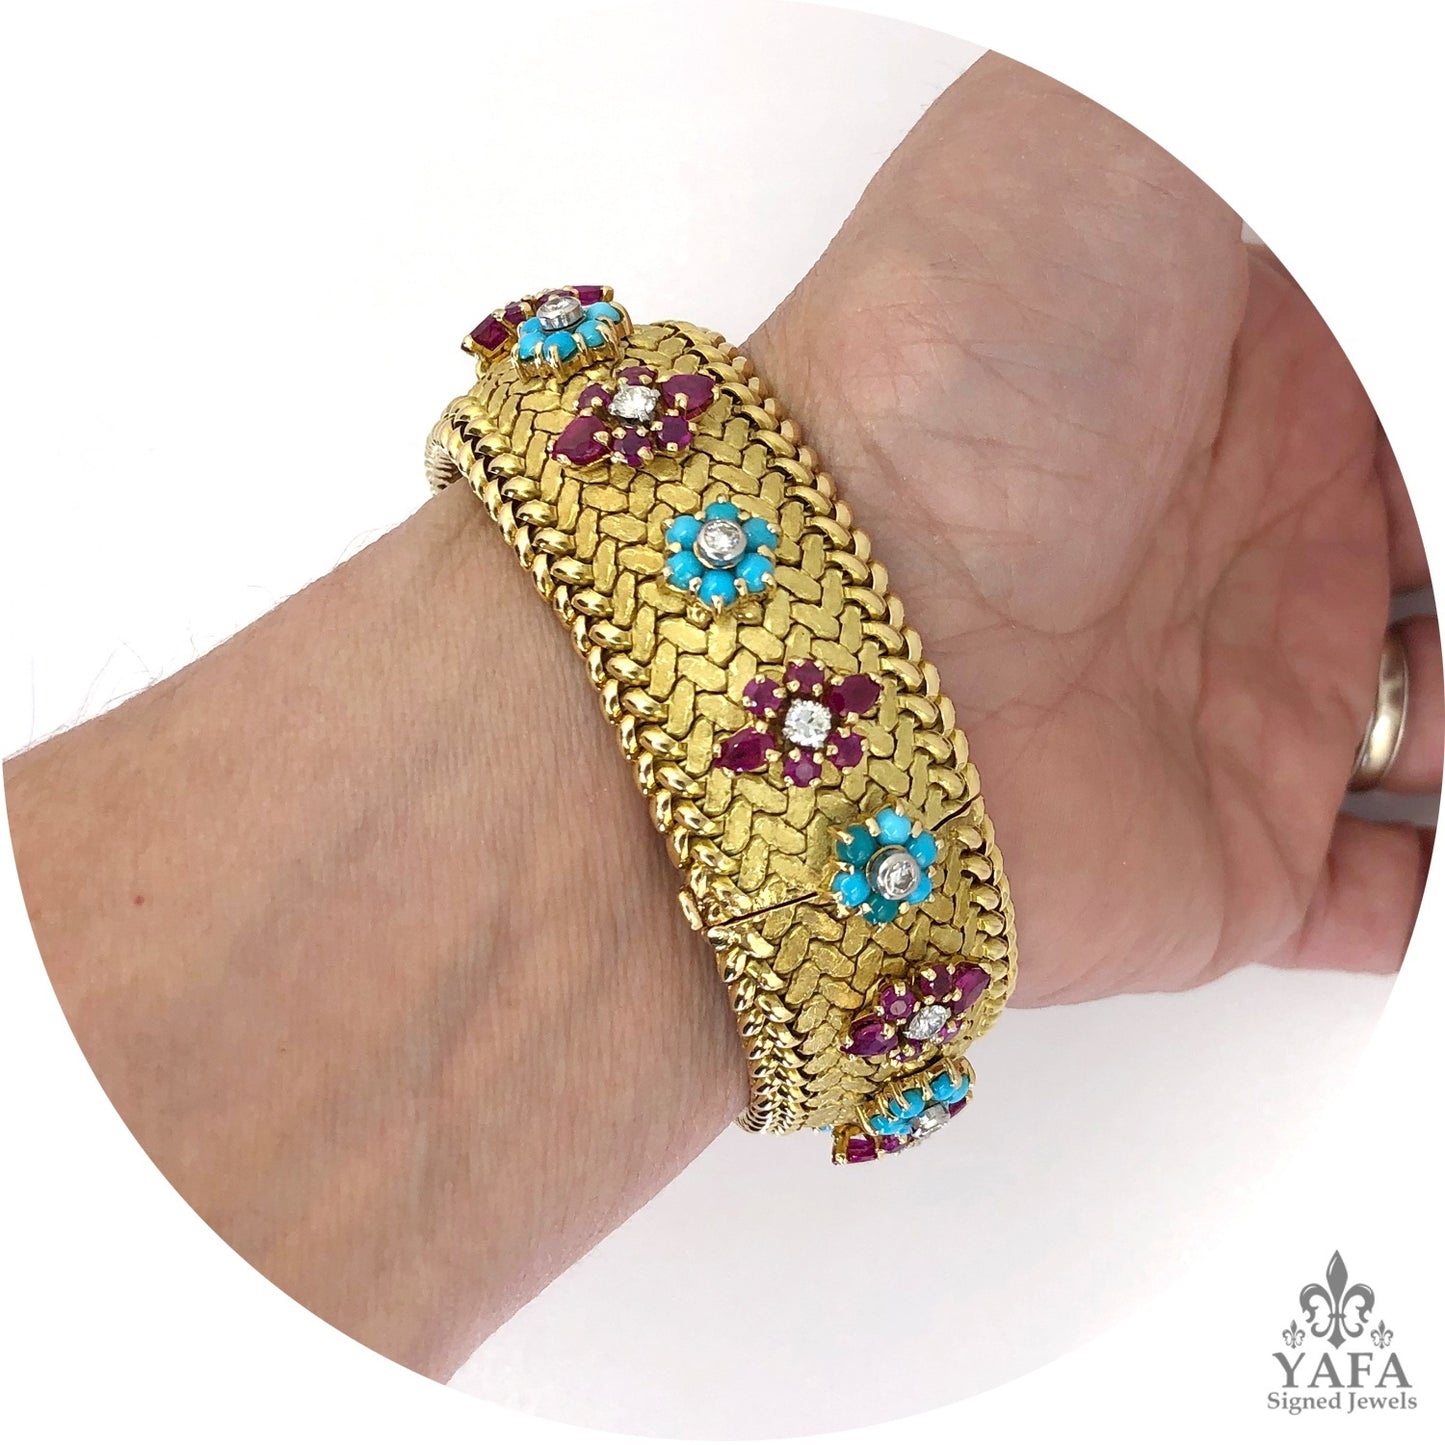 MAUBOUSSIN Ruby Turquoise Diamond Bracelet